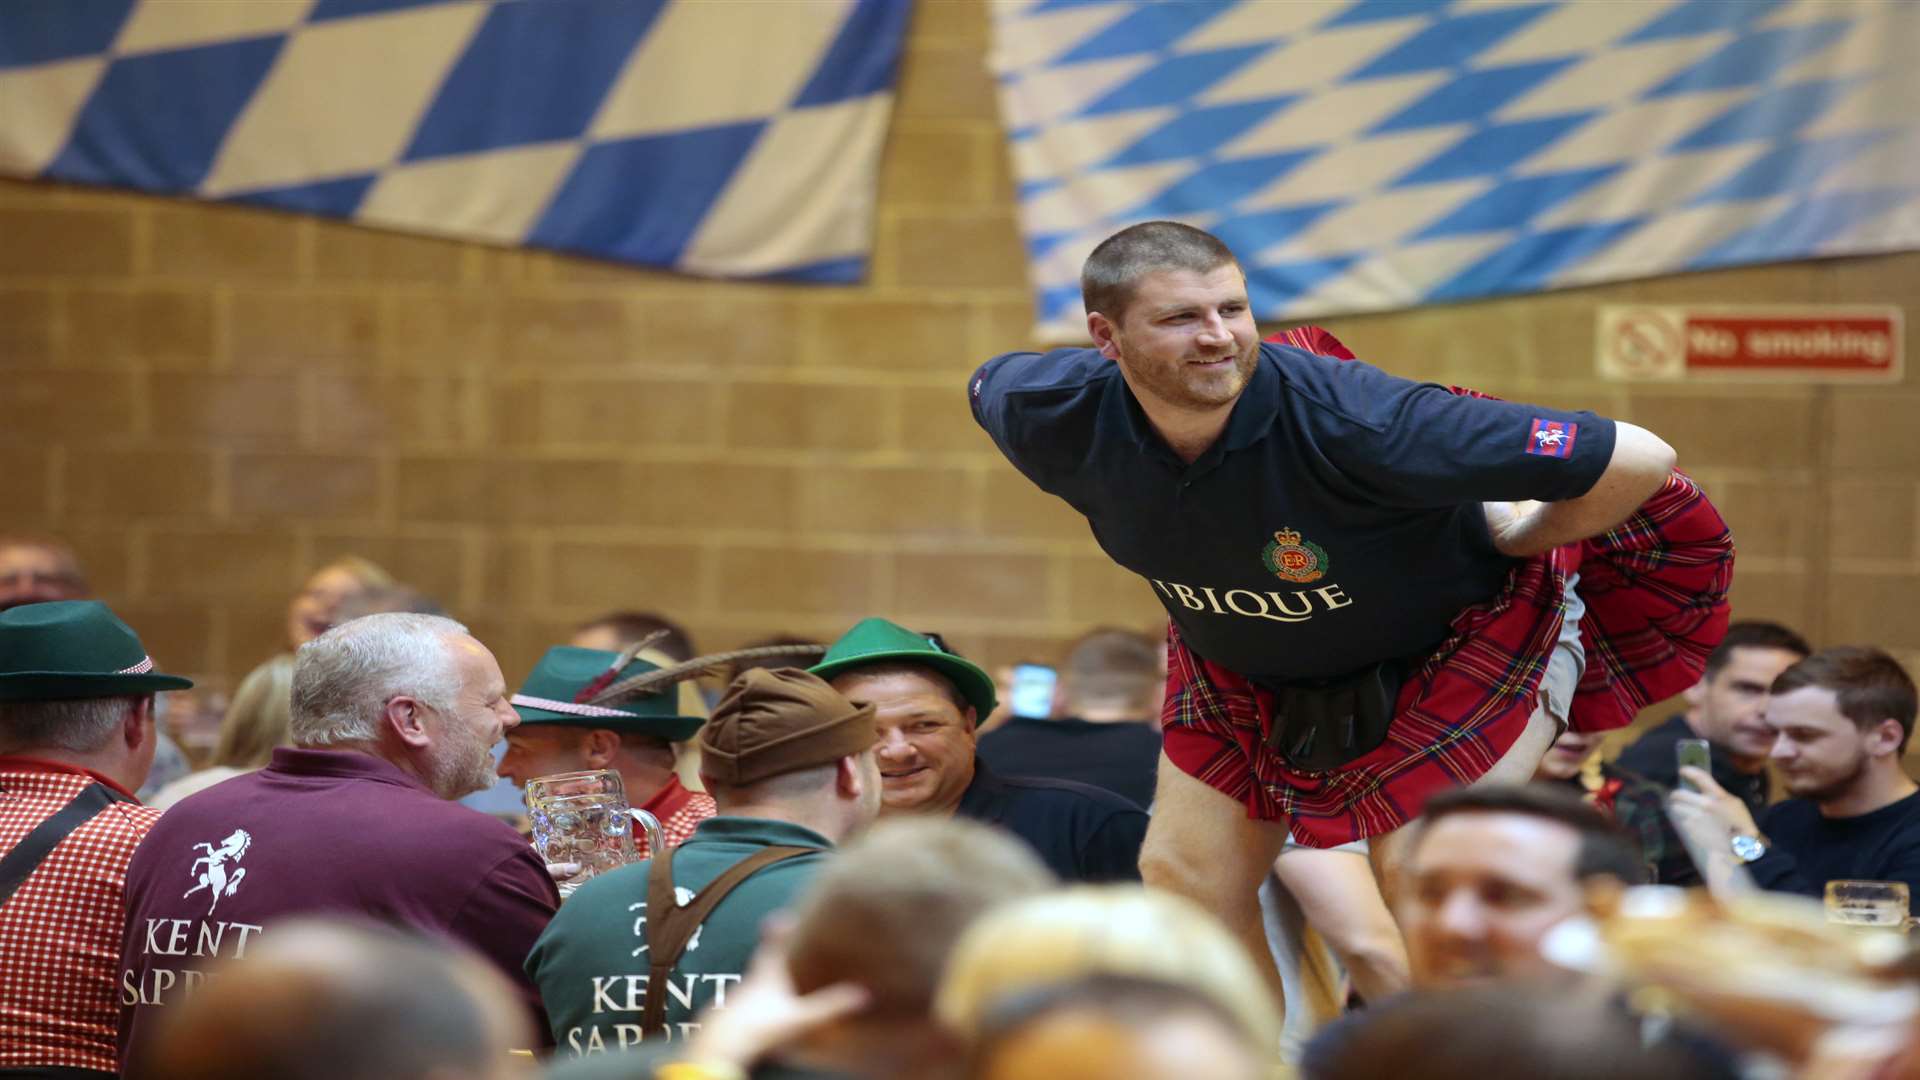 A reveller enjoys himself at Maidstone's first German beer festival